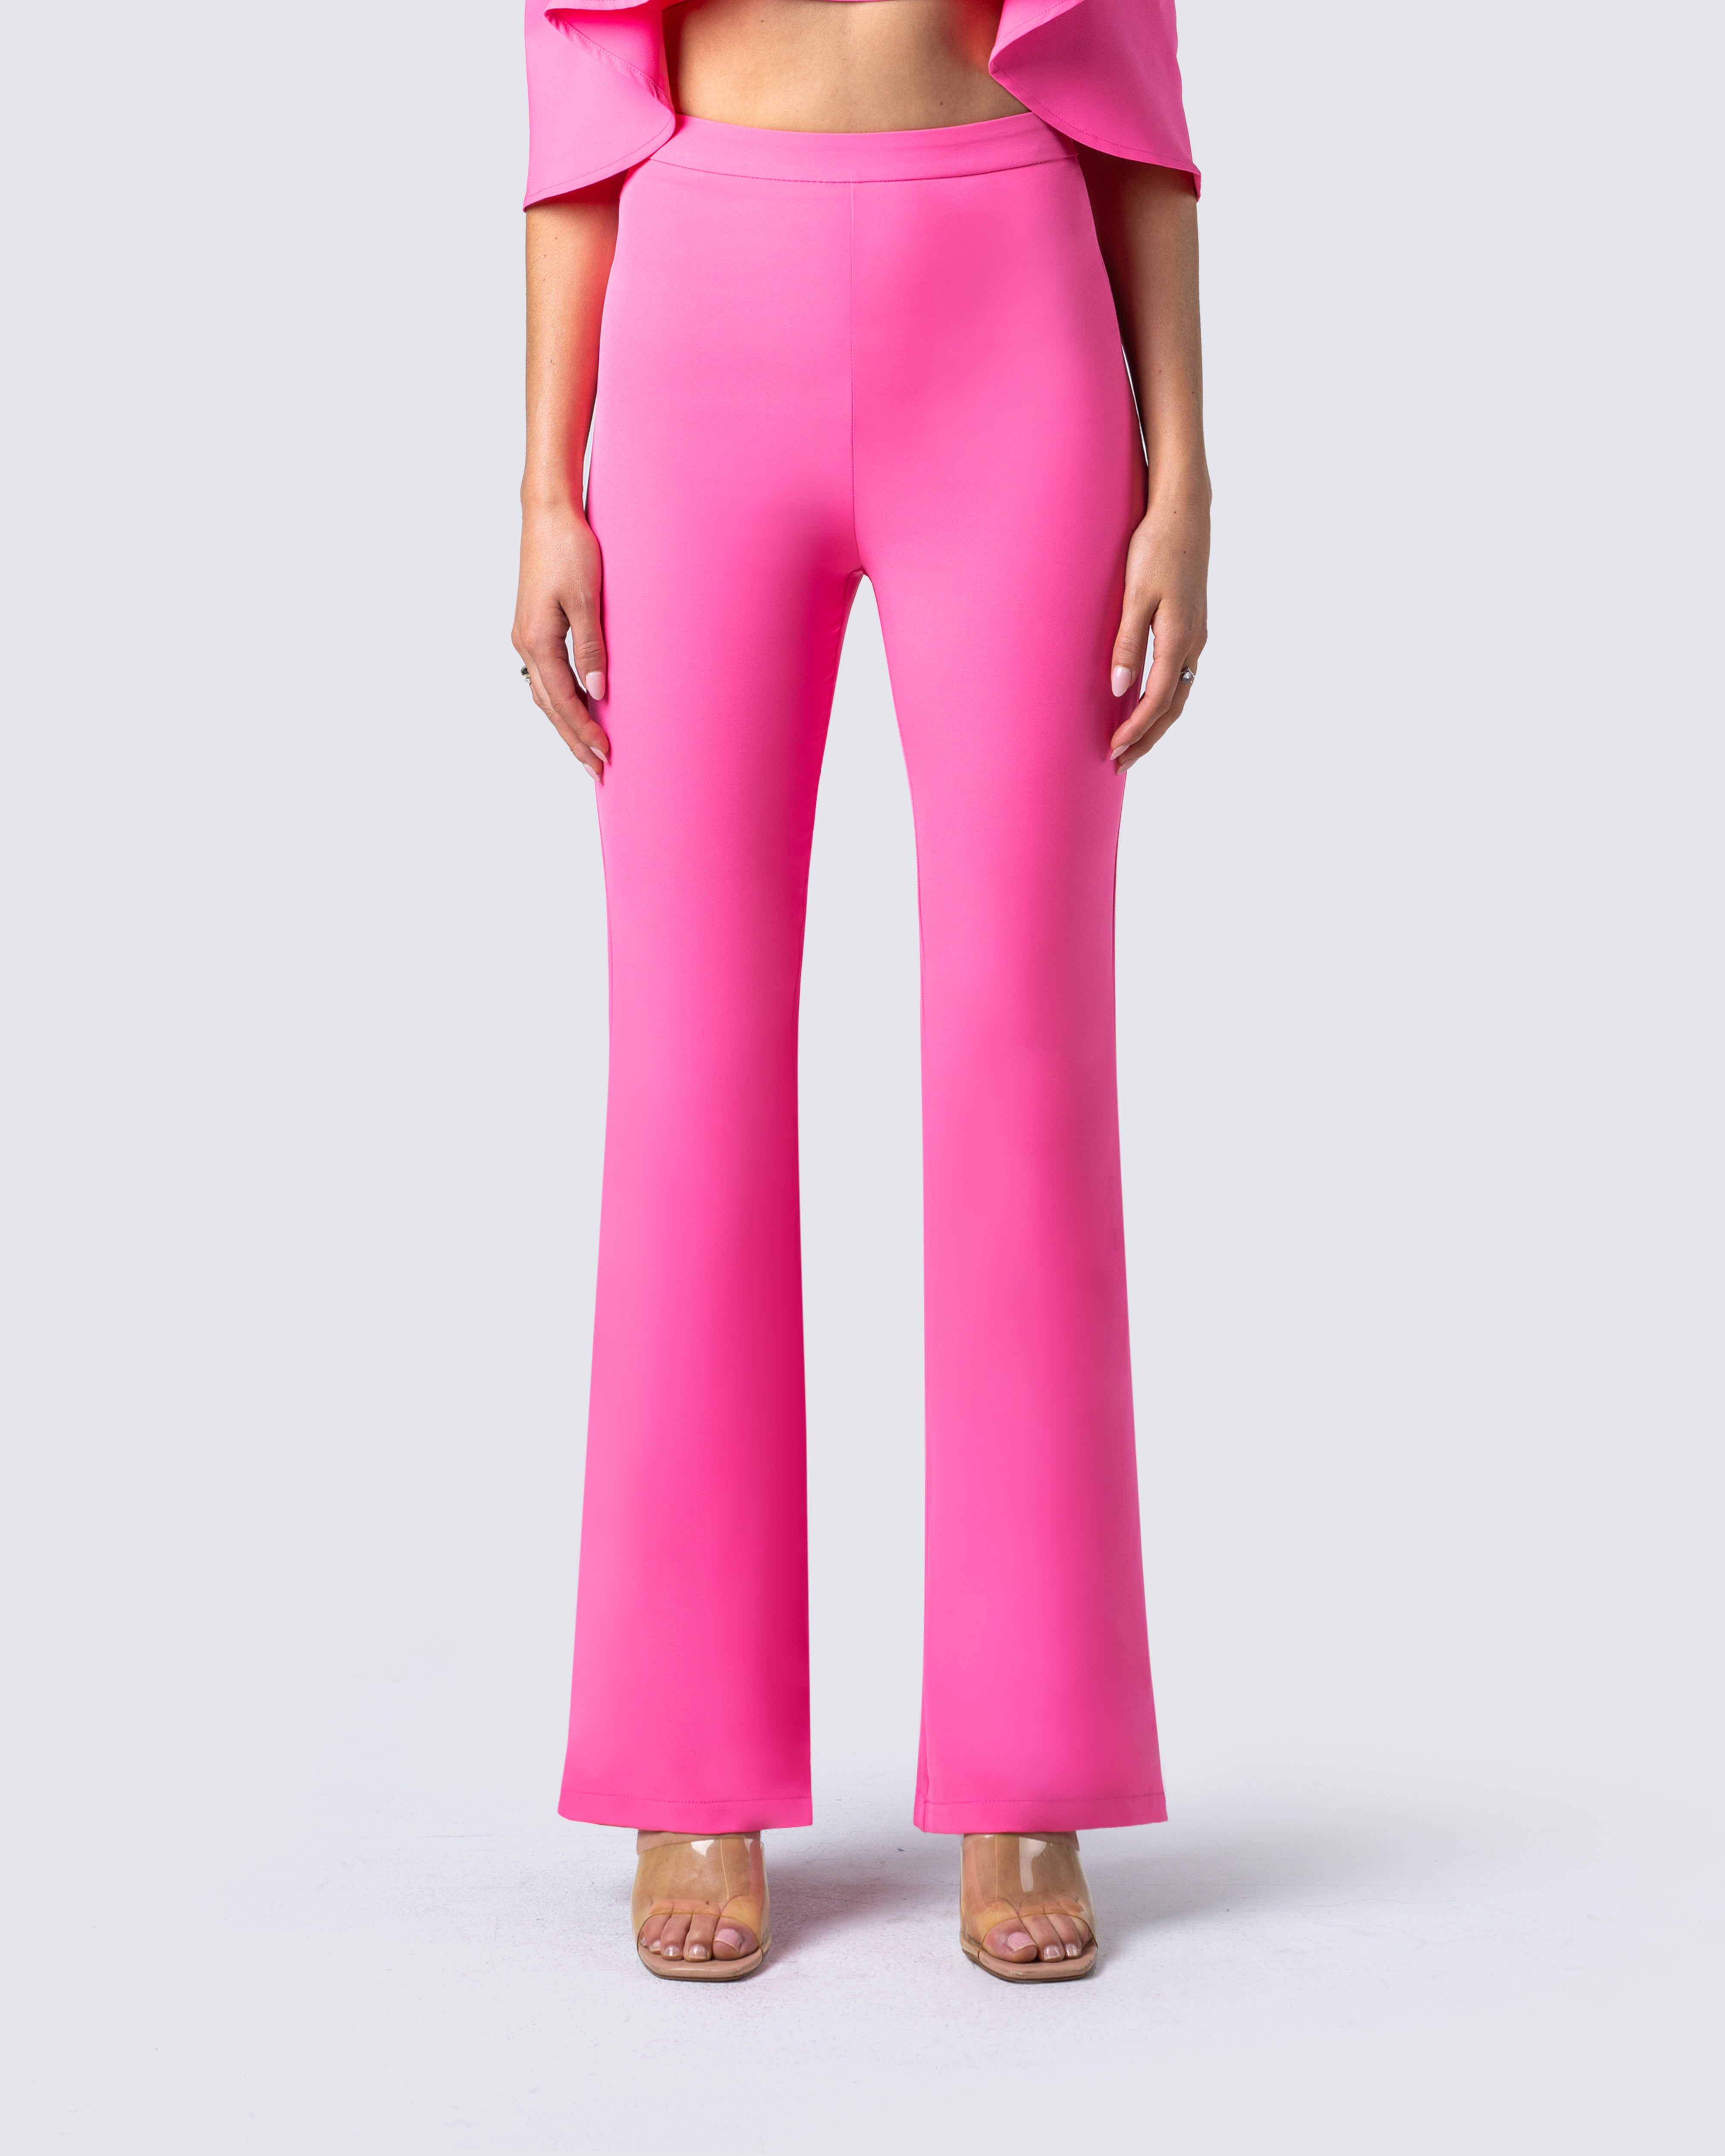 Pink Heart High Waist Flare Pants Hippie Summer Love Trousers Bell Bottom  Jeans | eBay